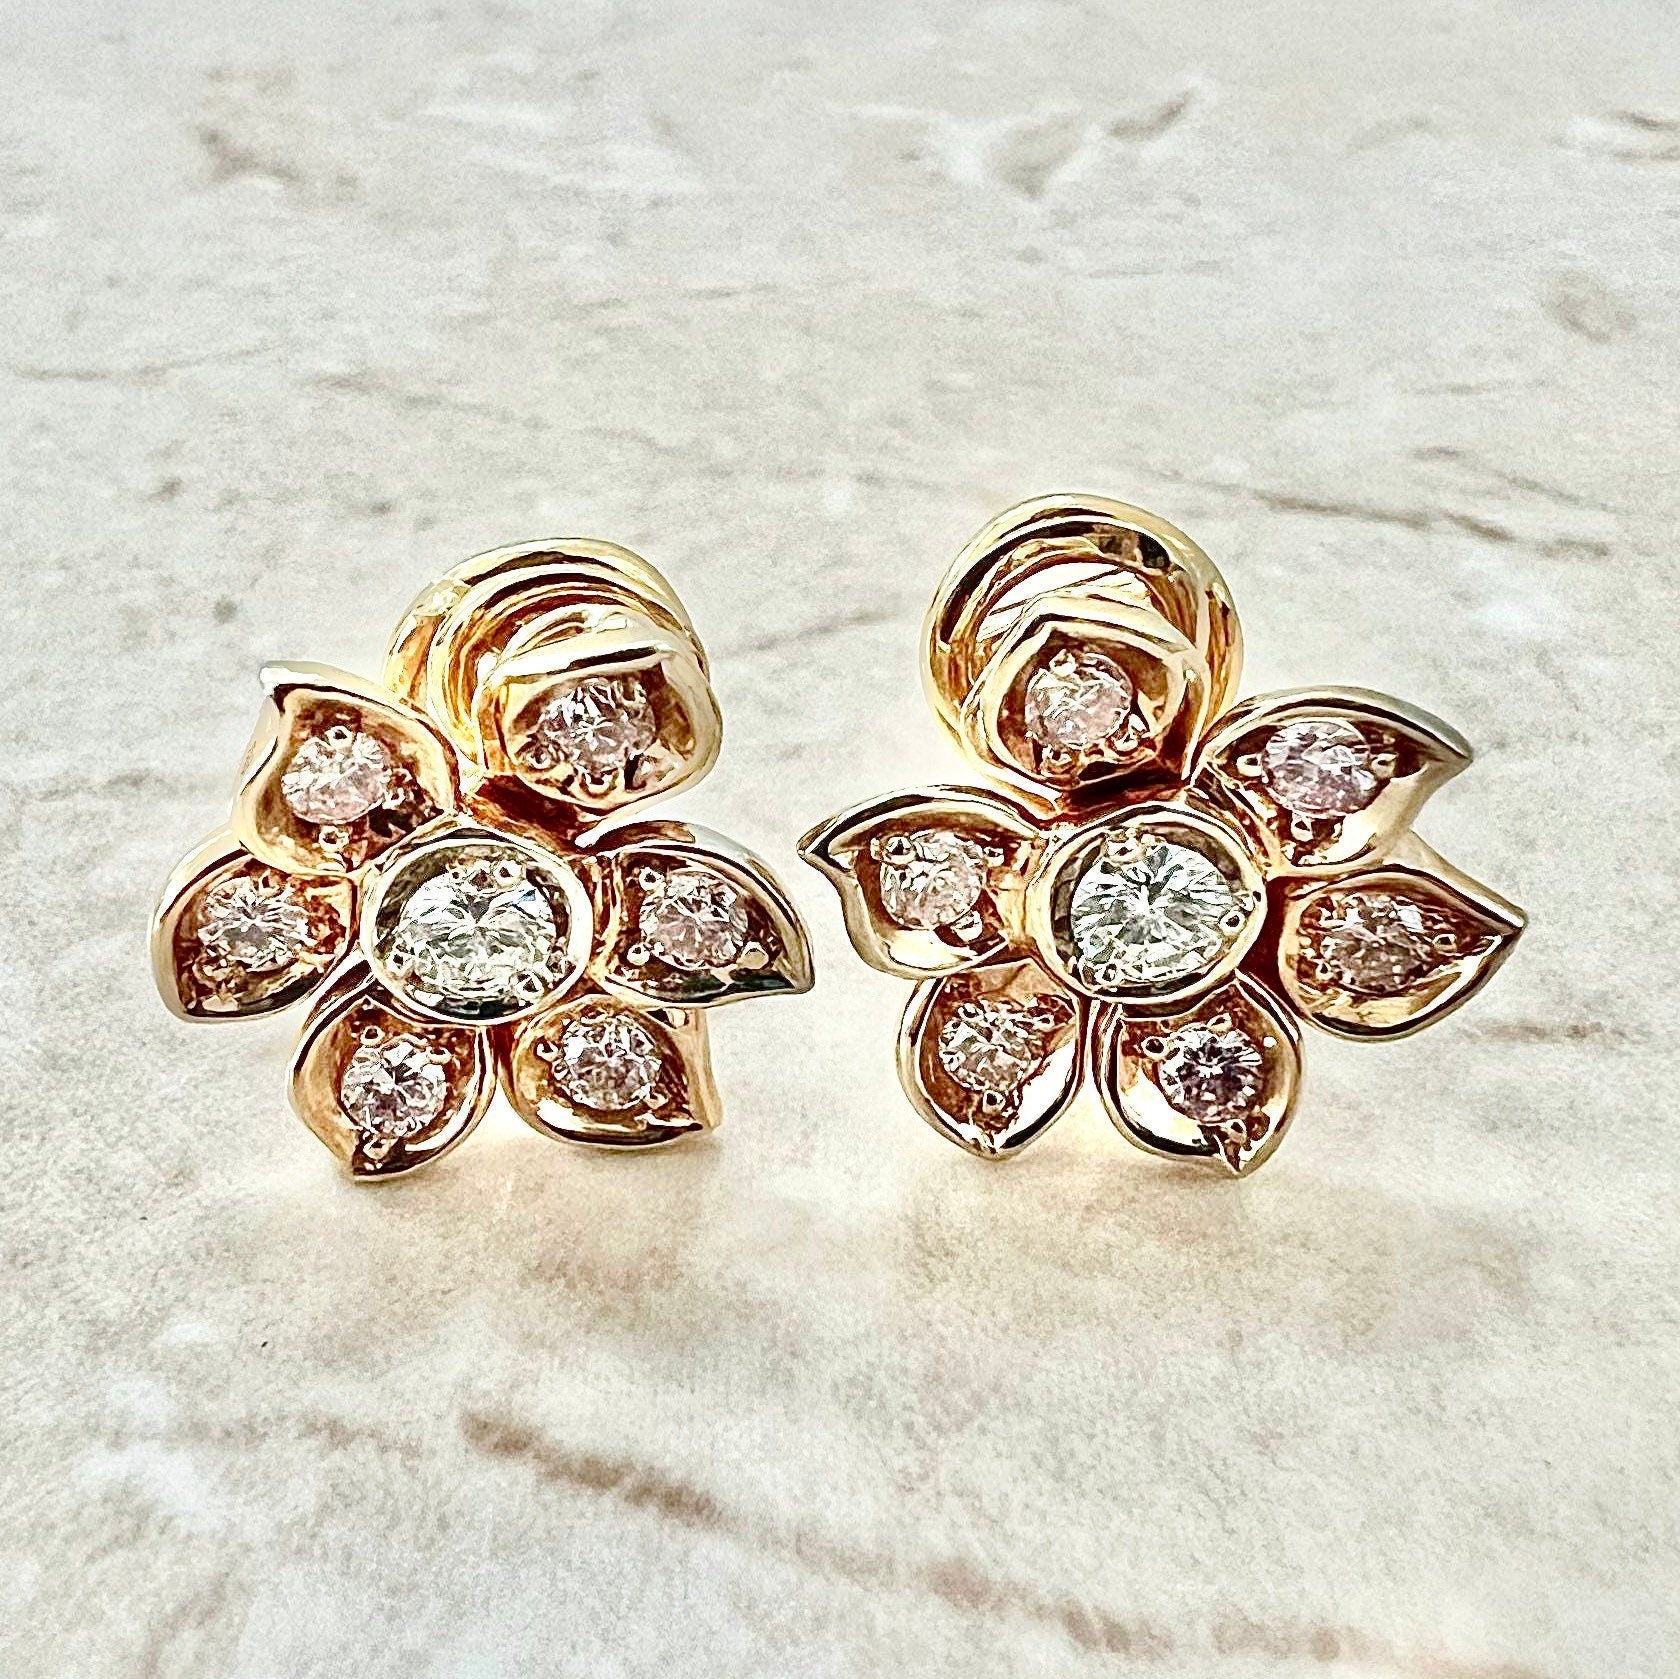 Rare Vintage 18K Pink Diamond Halo Earrings By Carvin French - Rose Gold Diamond Earrings - Diamond Flower Earrings - Handcrafted Earrings